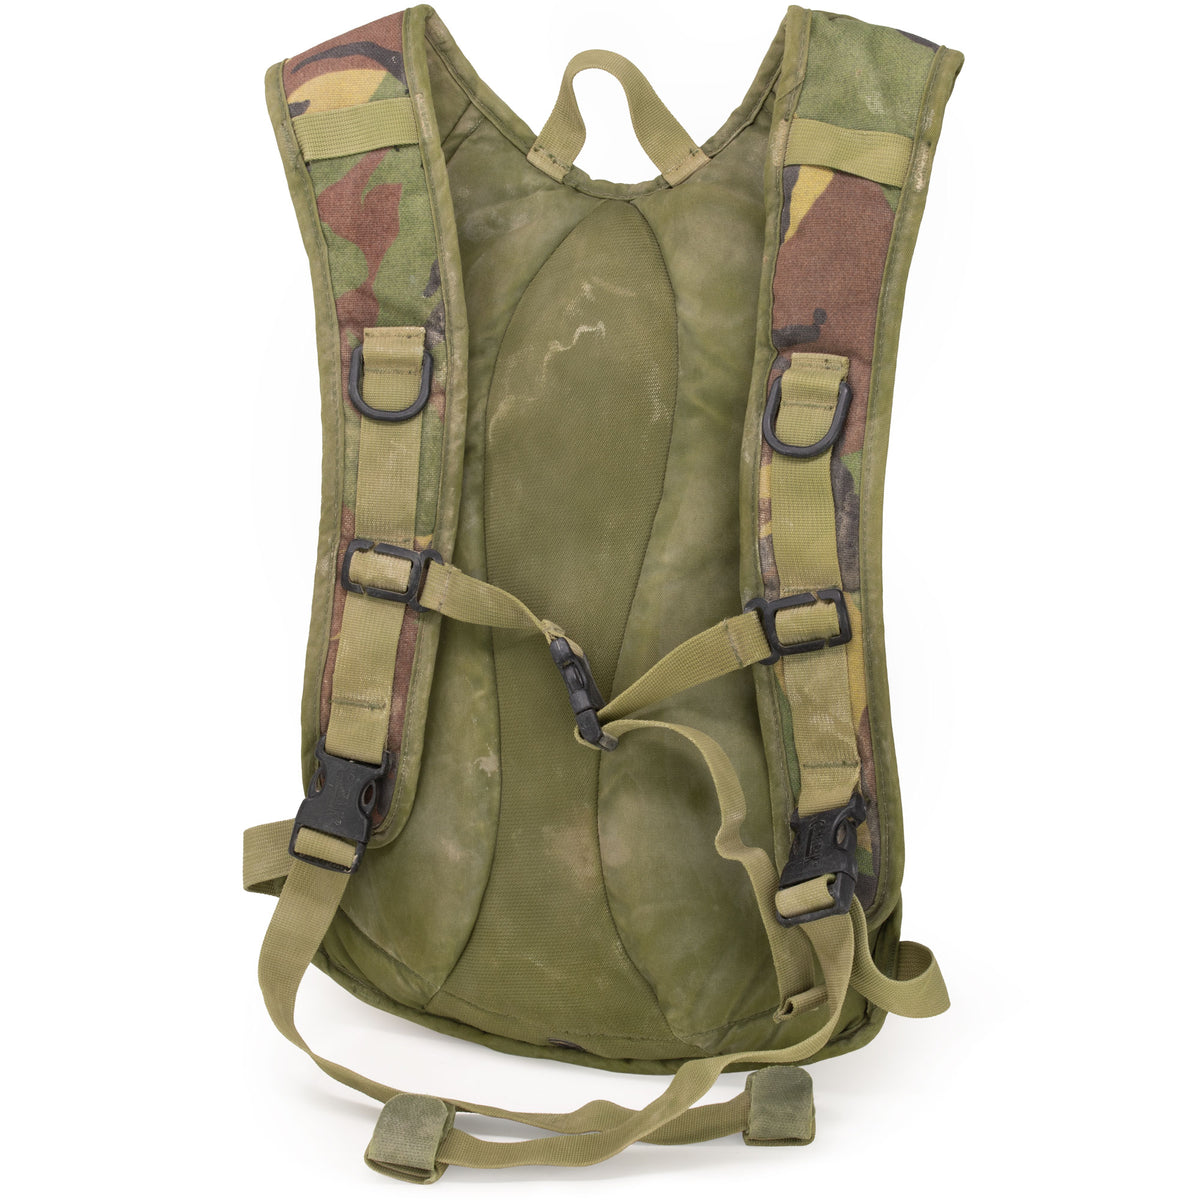 Dutch Army Issue Camelbak Hydration Backpack | Woodland